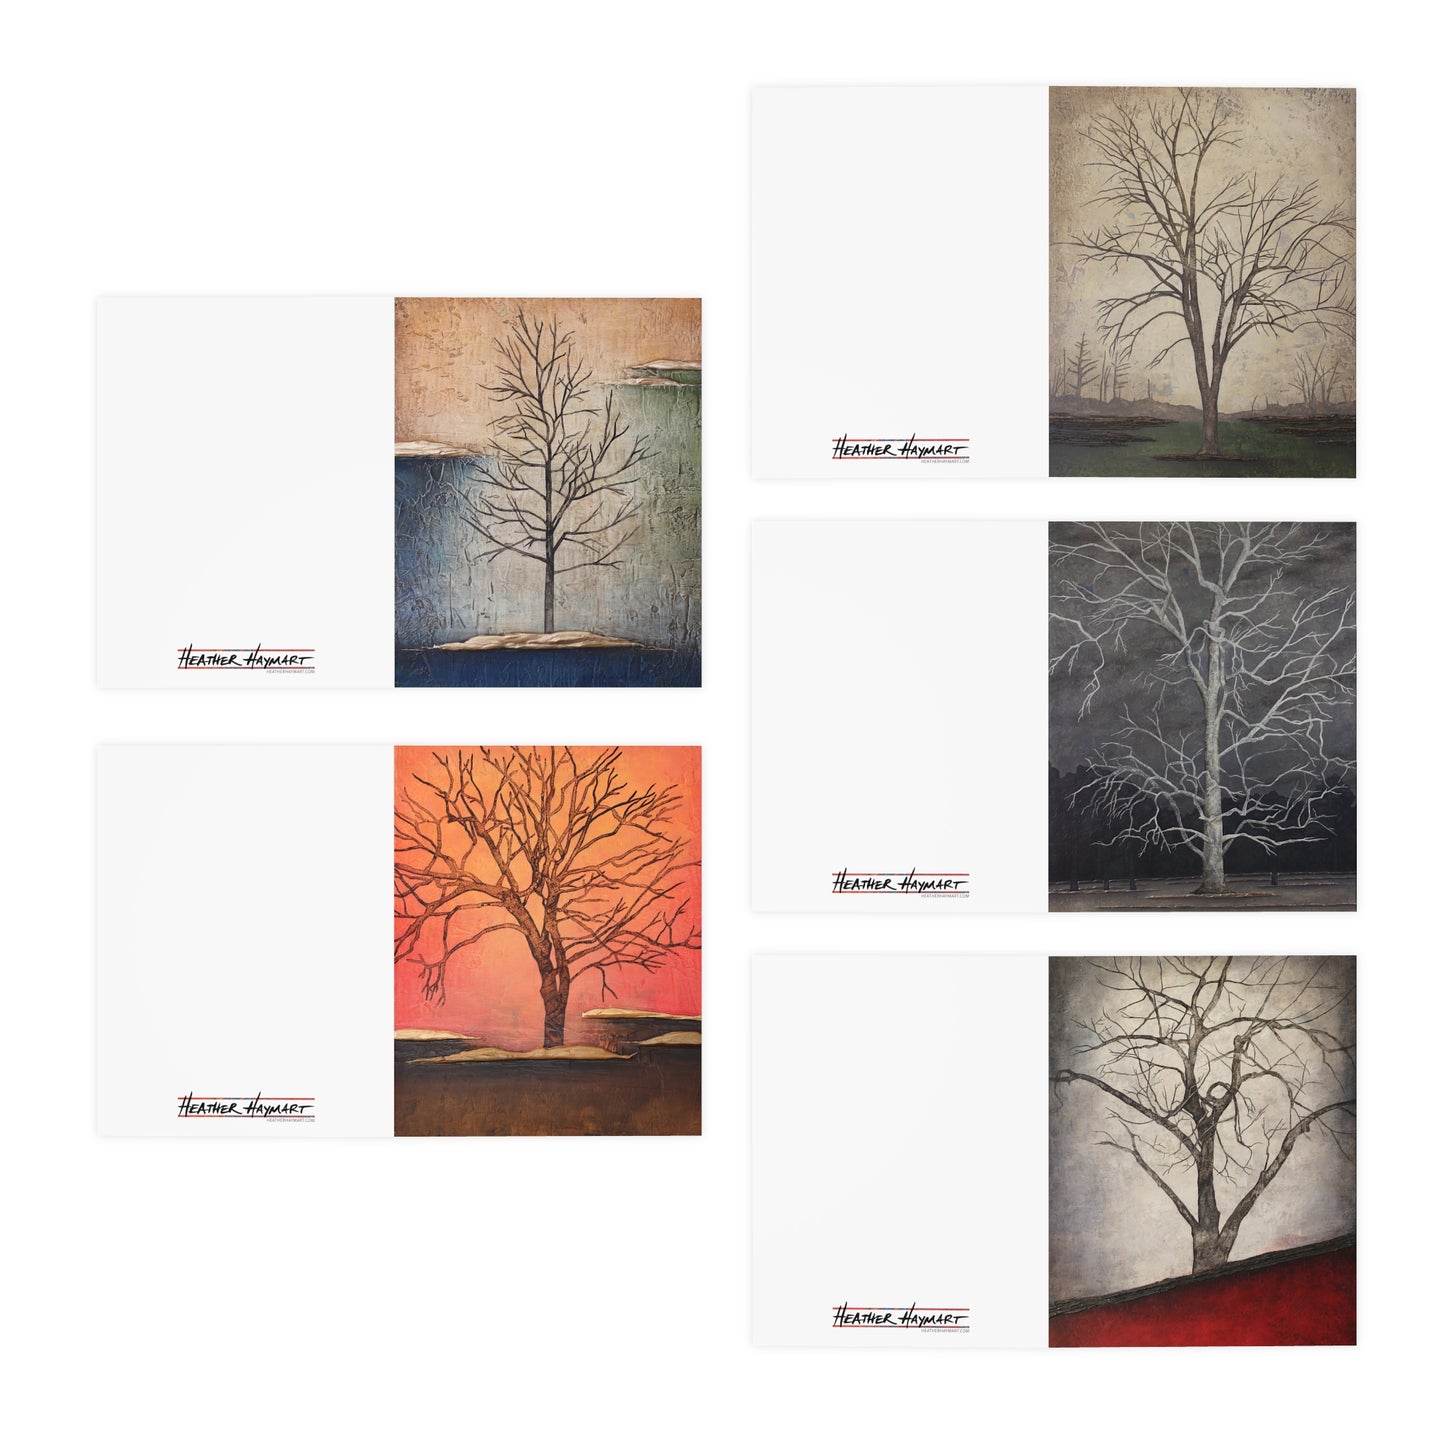 Vertical Tree Paintings - Greeting Cards (5-Pack)